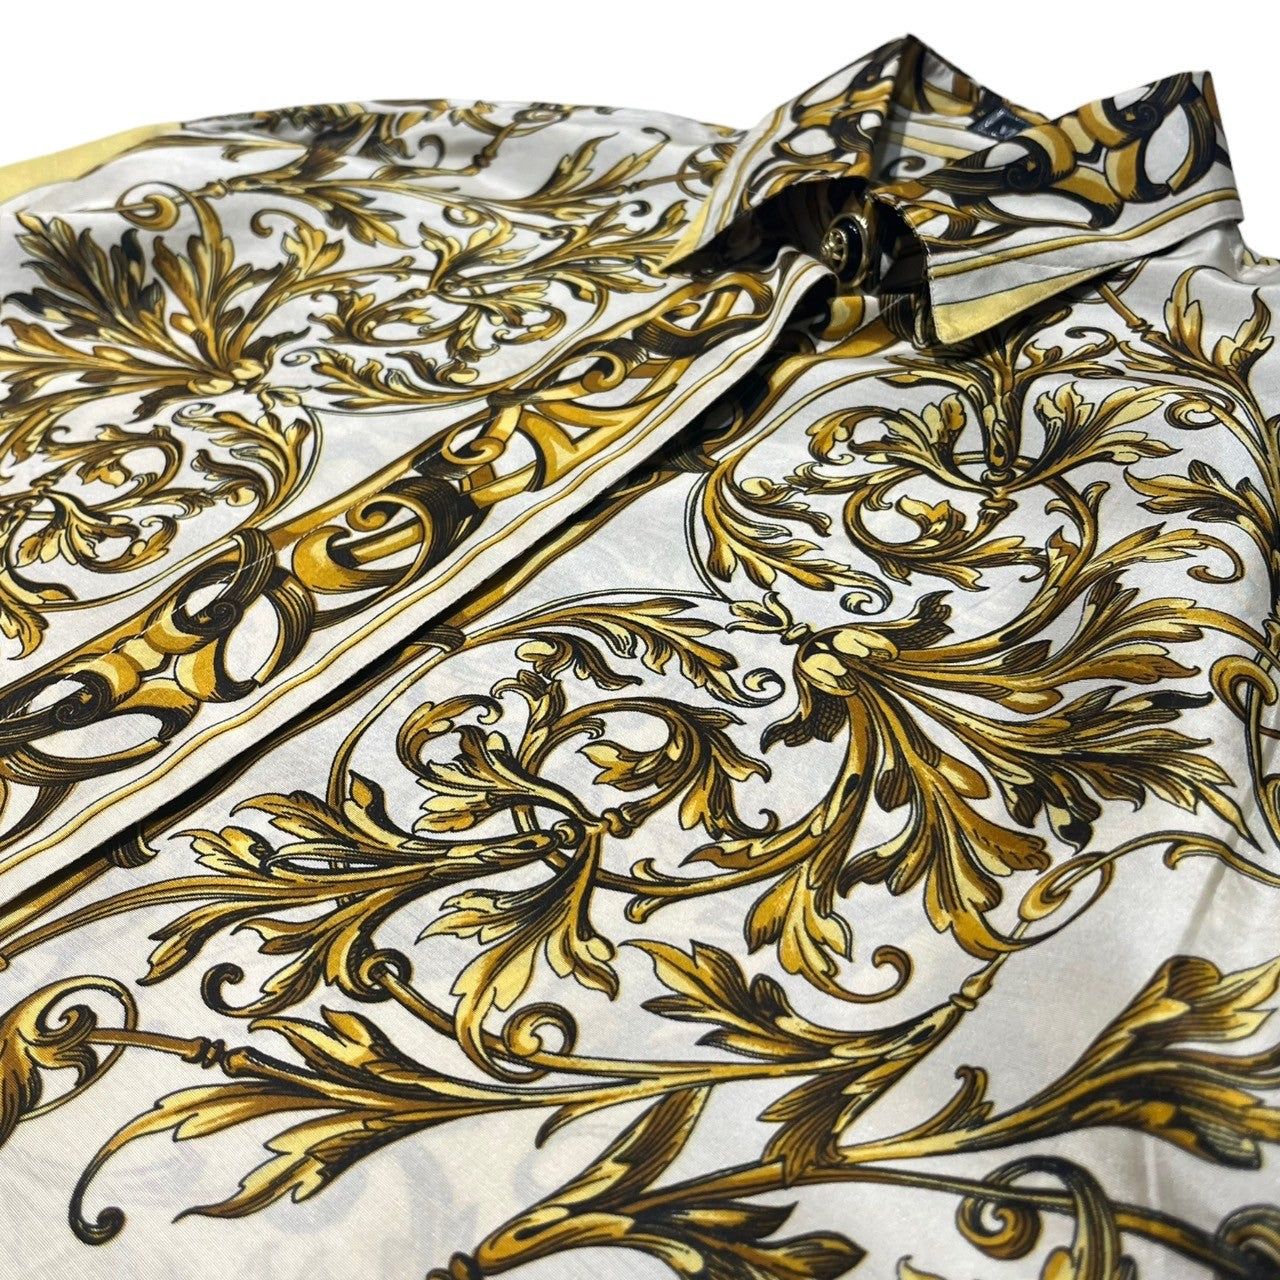 GIANNI VERSACE(ジャンニヴェルサーチ) 90’s  scarf silk shirt 金ボタンスカーフ柄比翼シルクシャツ 40(Lサイズ程度) アイボリー×ゴールド 総柄/シルク100％